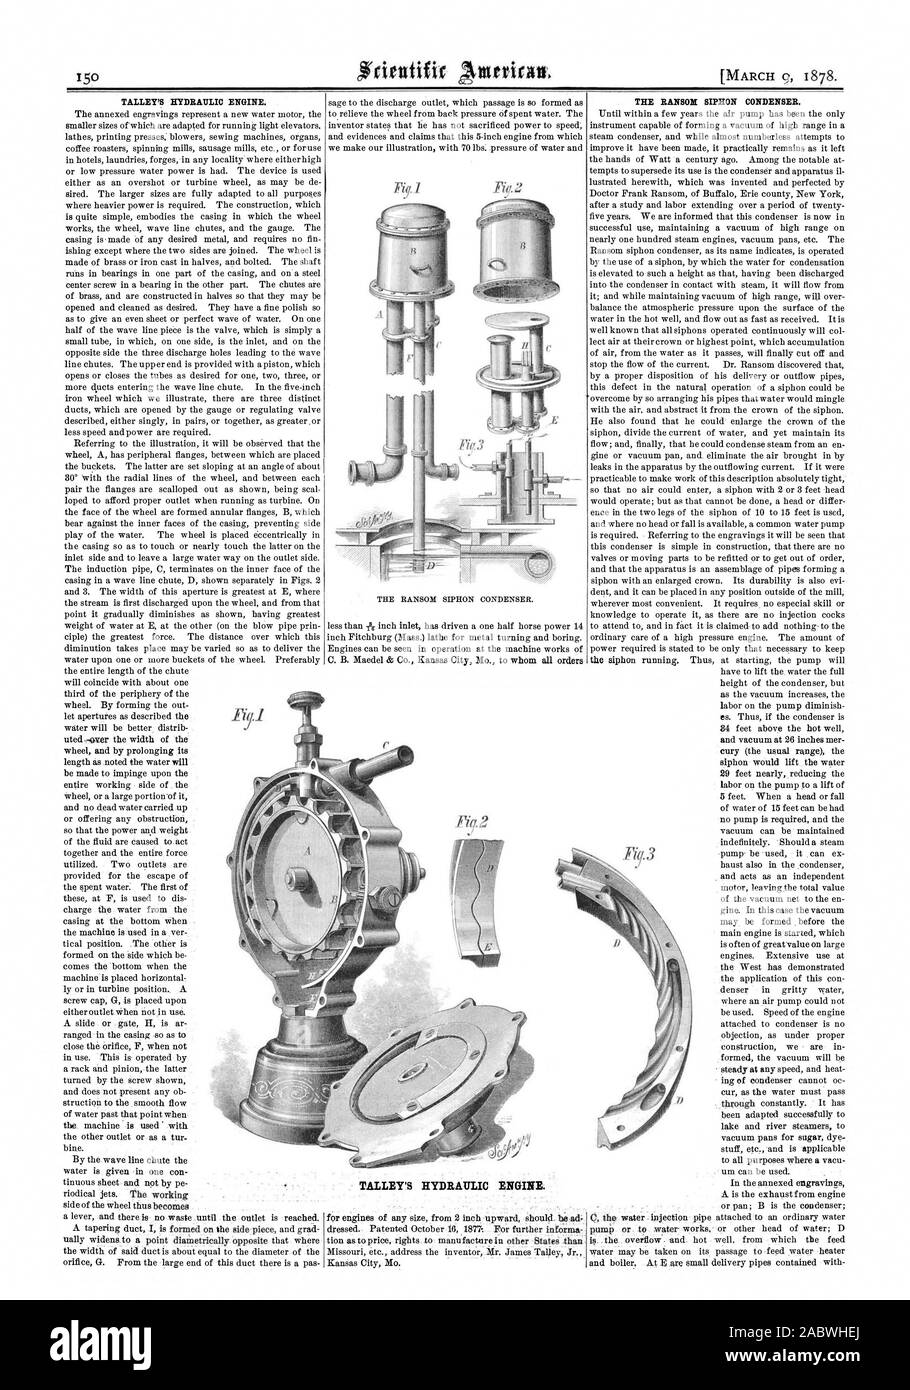 TALLEY'S HYDRAULIC ENGINE., scientific american, 1878-03-09 Stock Photo